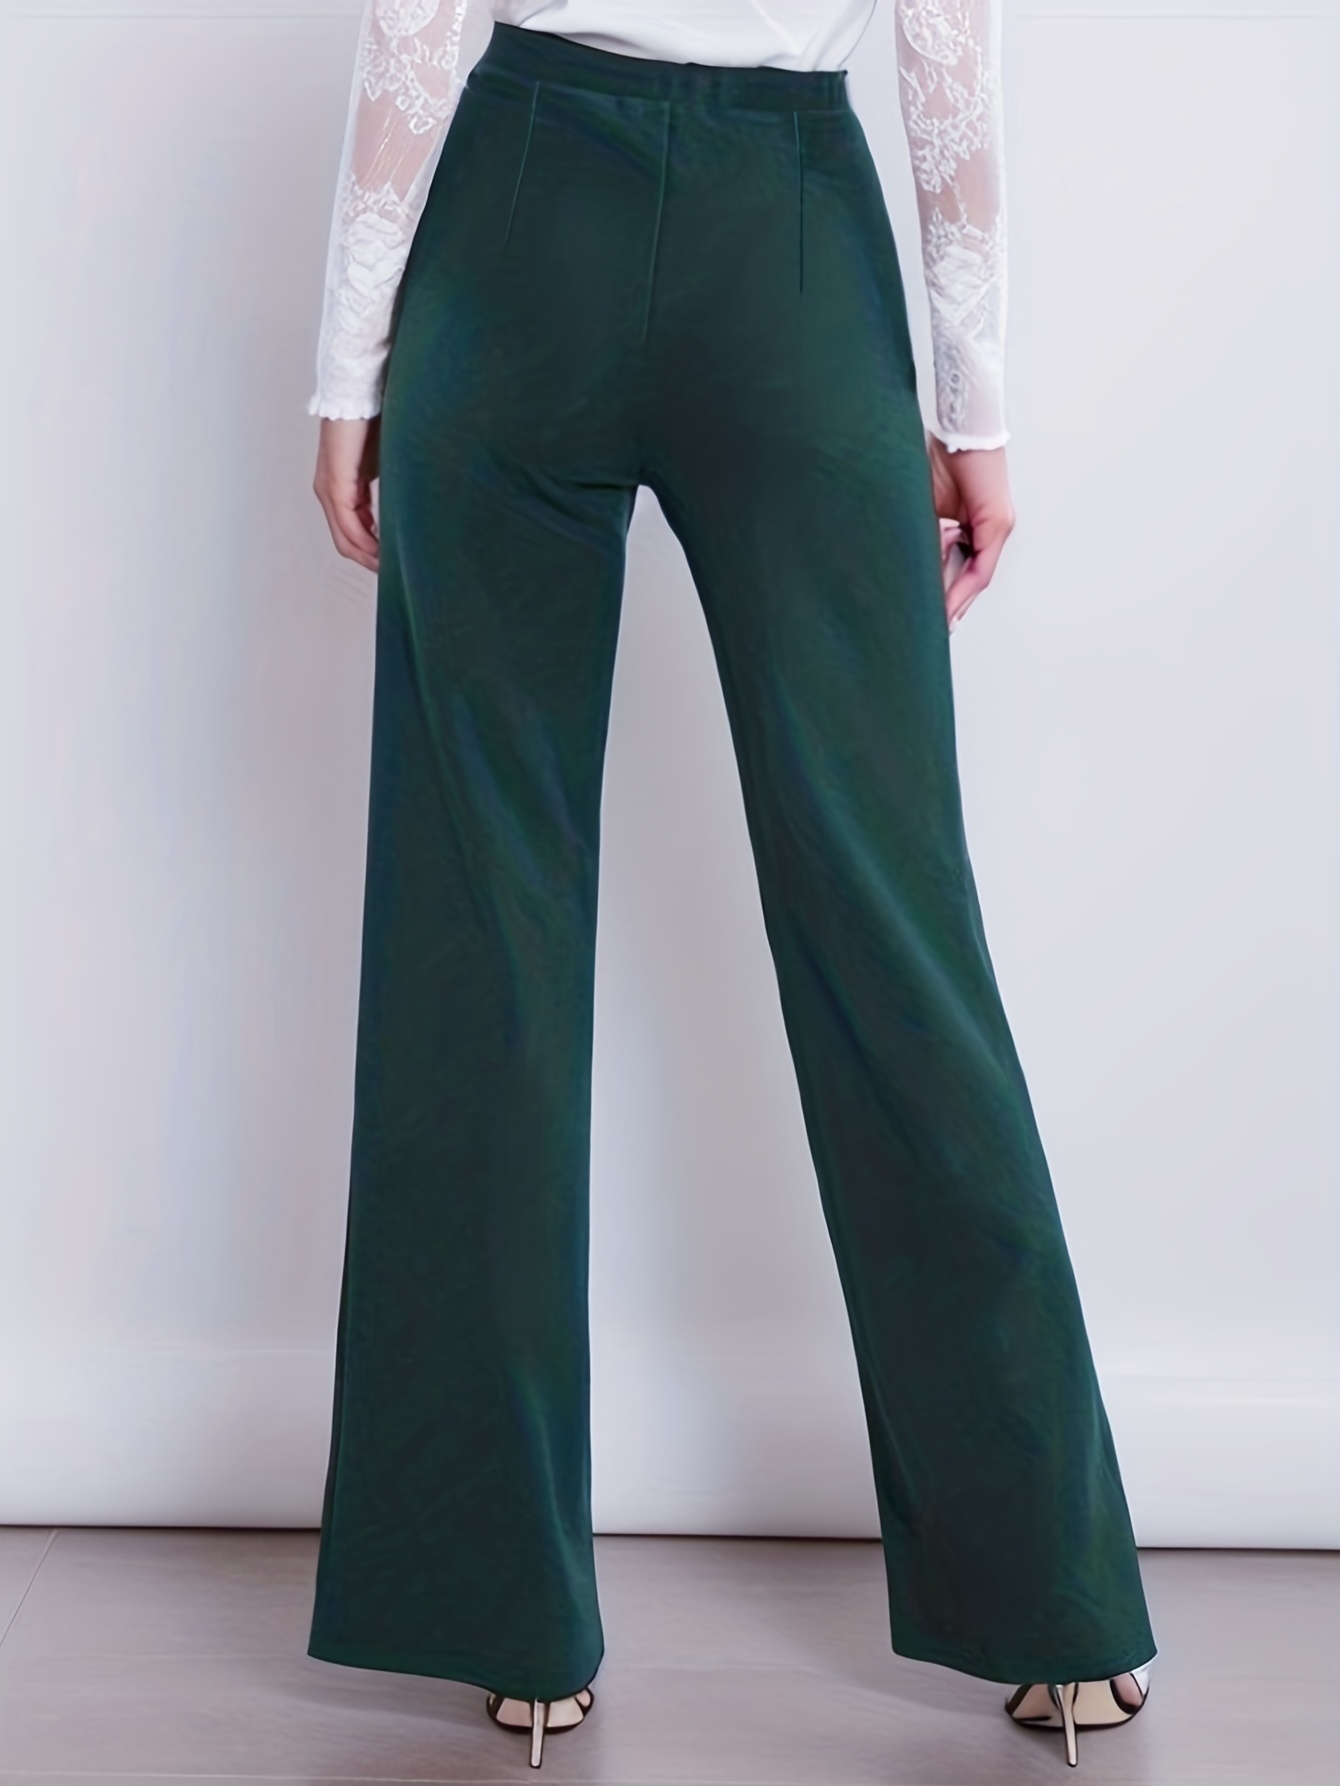 Pantalones De Pierna Ancha Pantalones de cintura alta para mujer, pantalón  largo informal elegante, pantalón femenino (verde S) Cgtredaw Para estrenar